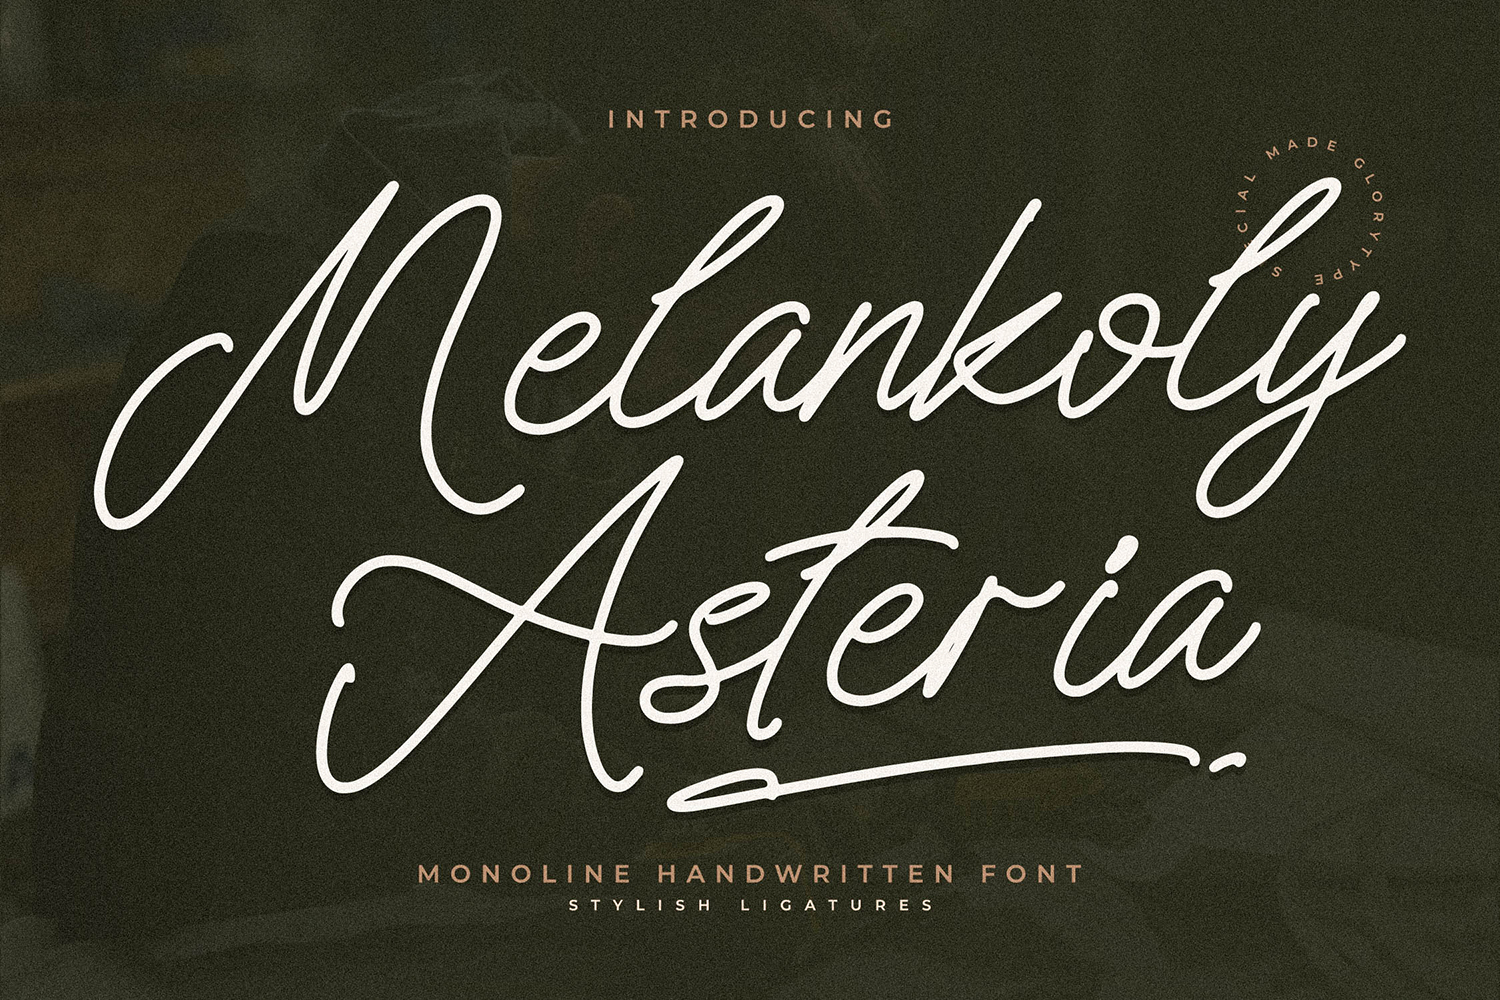 Melankoly Asteria Free Font